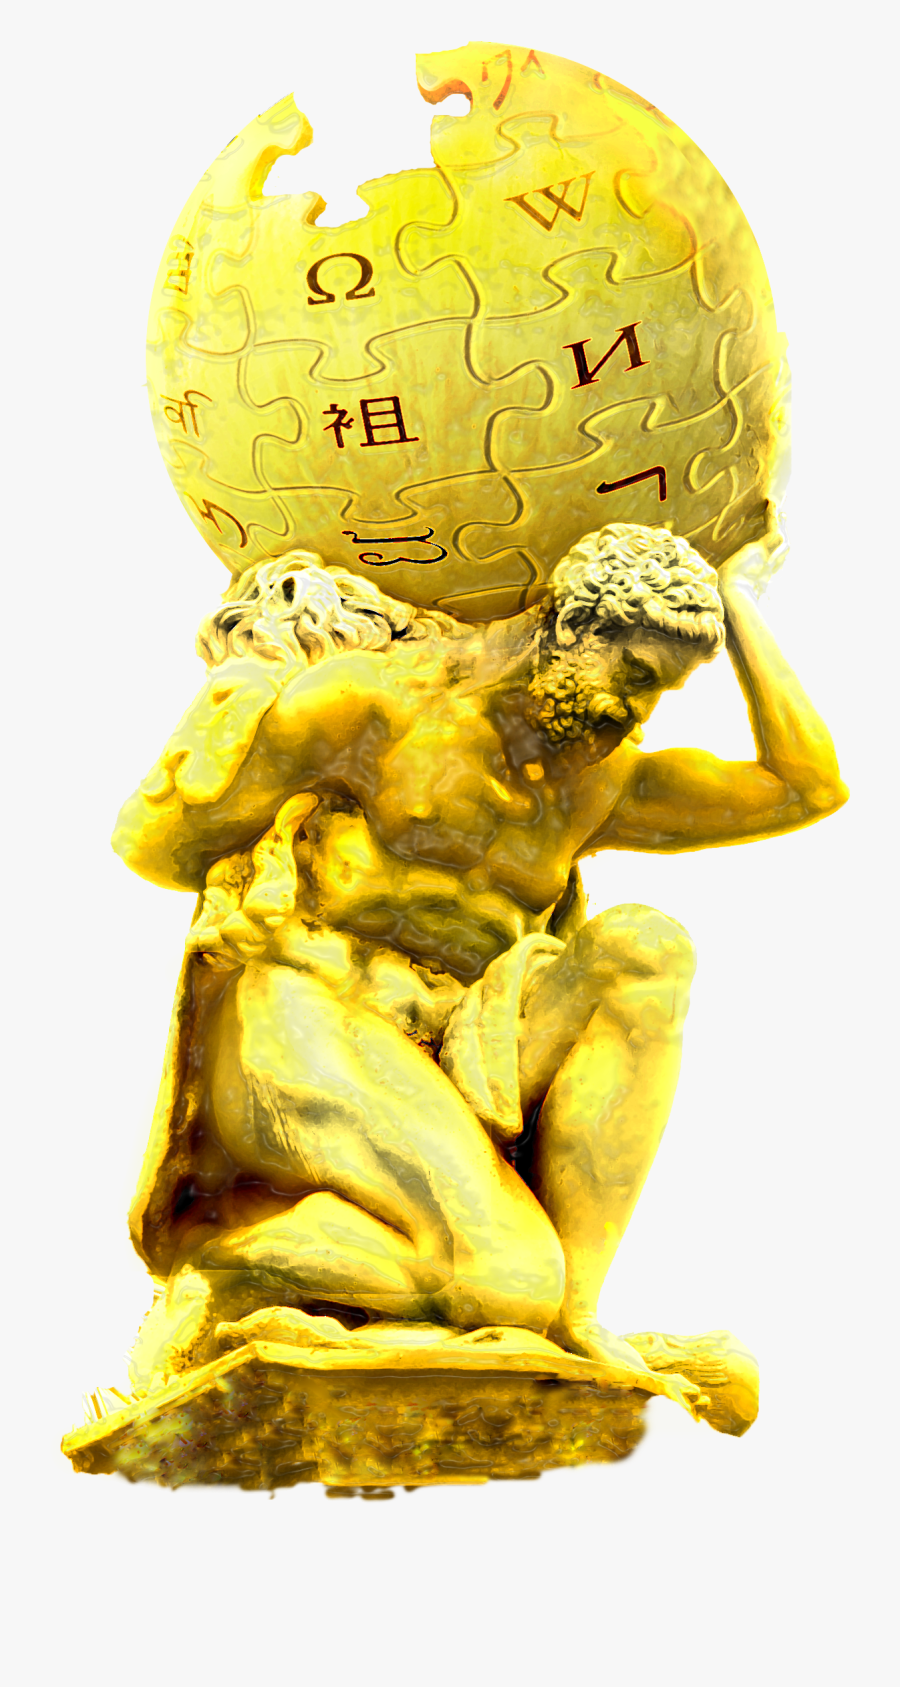 Gold Statue Png, Transparent Clipart